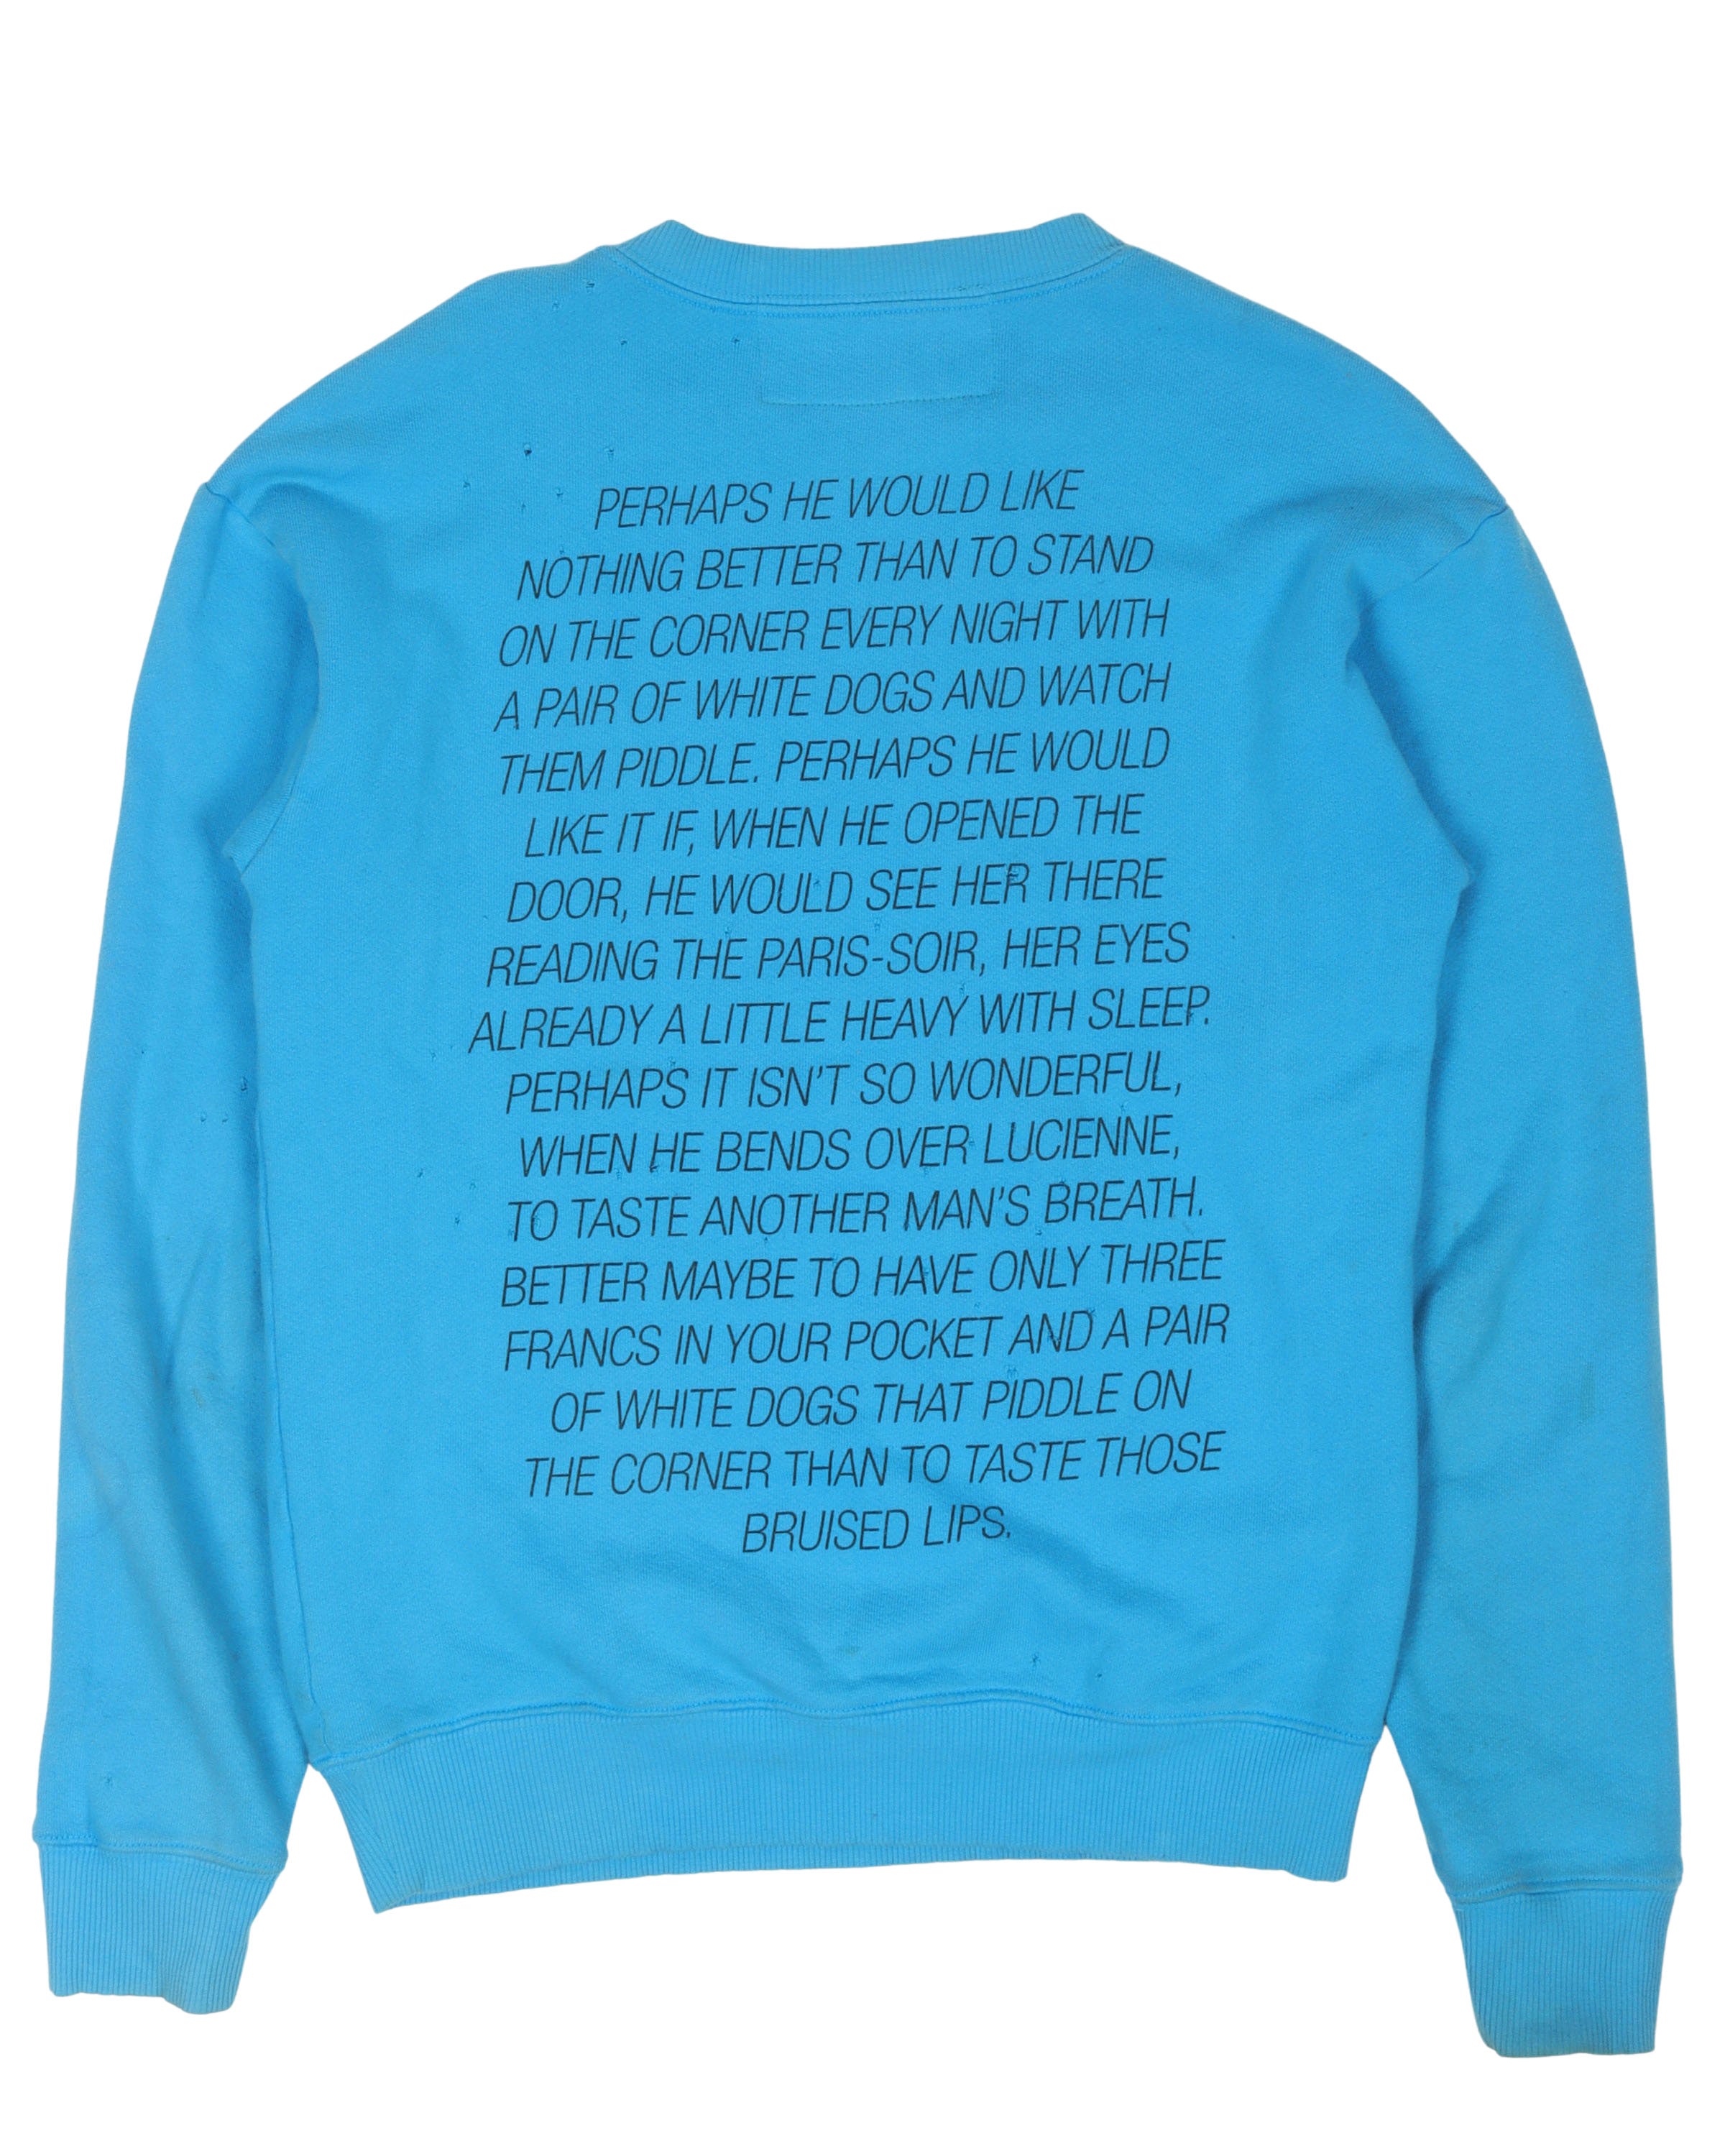 SS17 Henry Miller Tropic of Cancer Sweatshirt